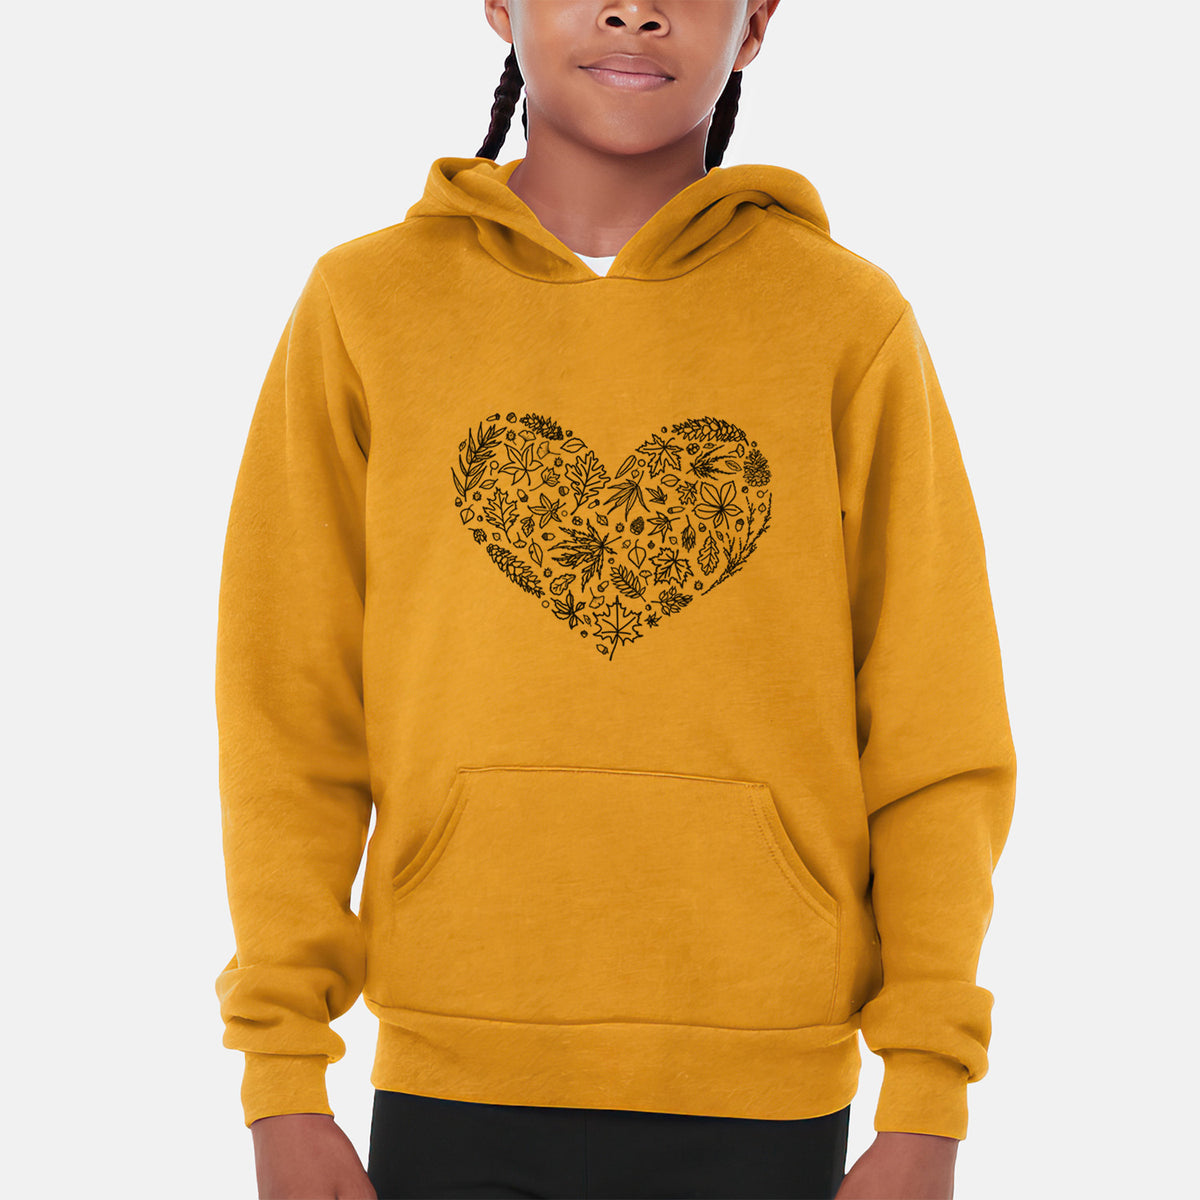 Heart Full of Autumn Leaves - Youth Hoodie Sweatshirt